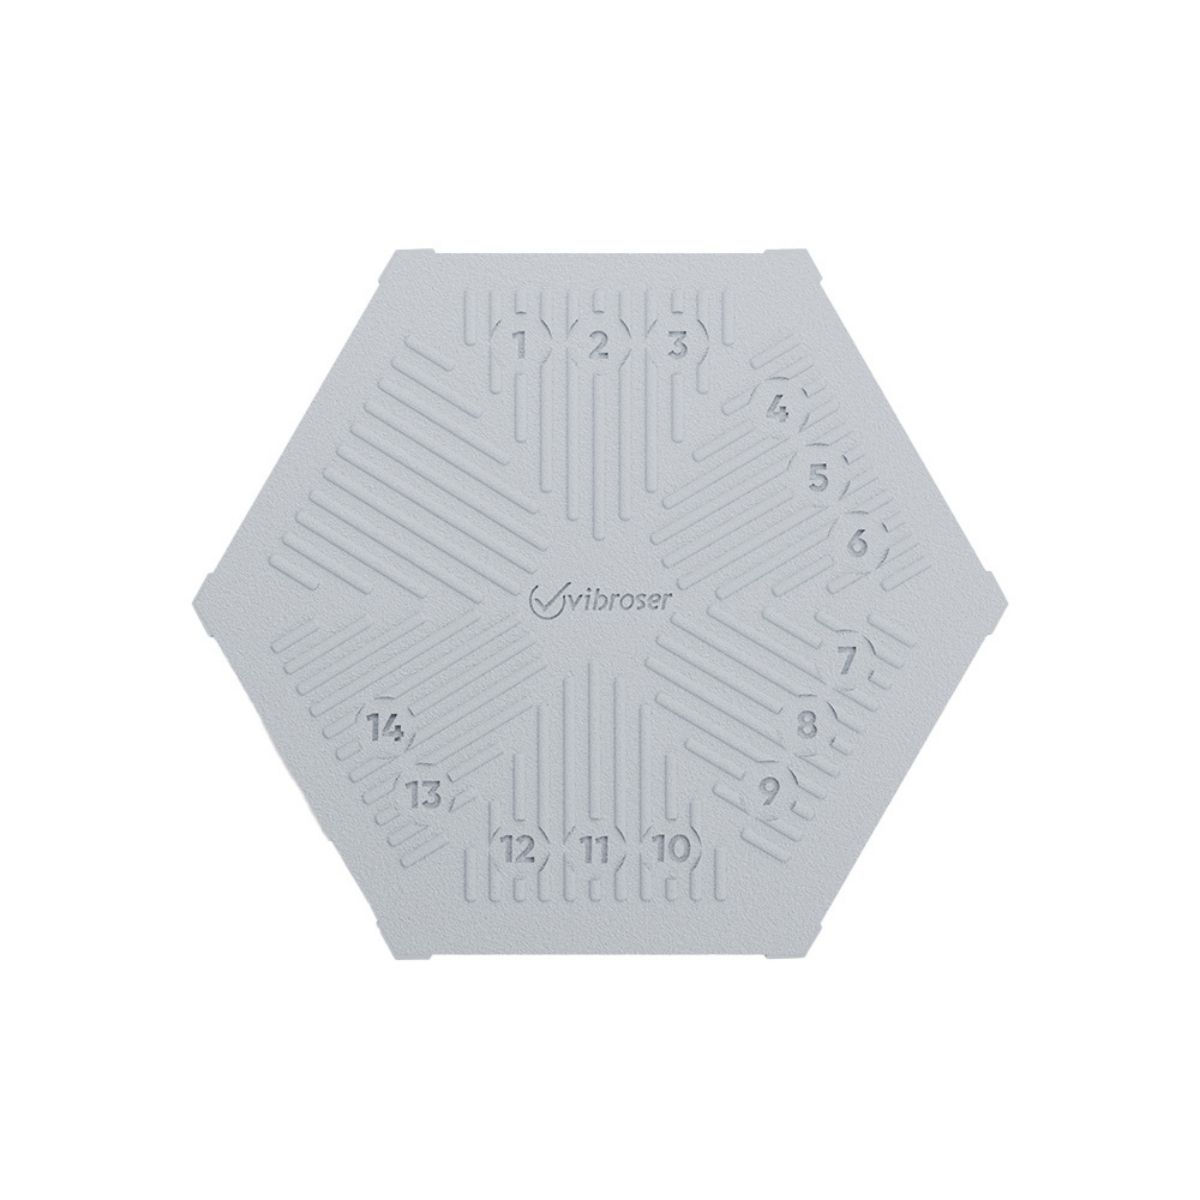 Hexagon Acid Proof Tile 100x116 Light Grey (1)